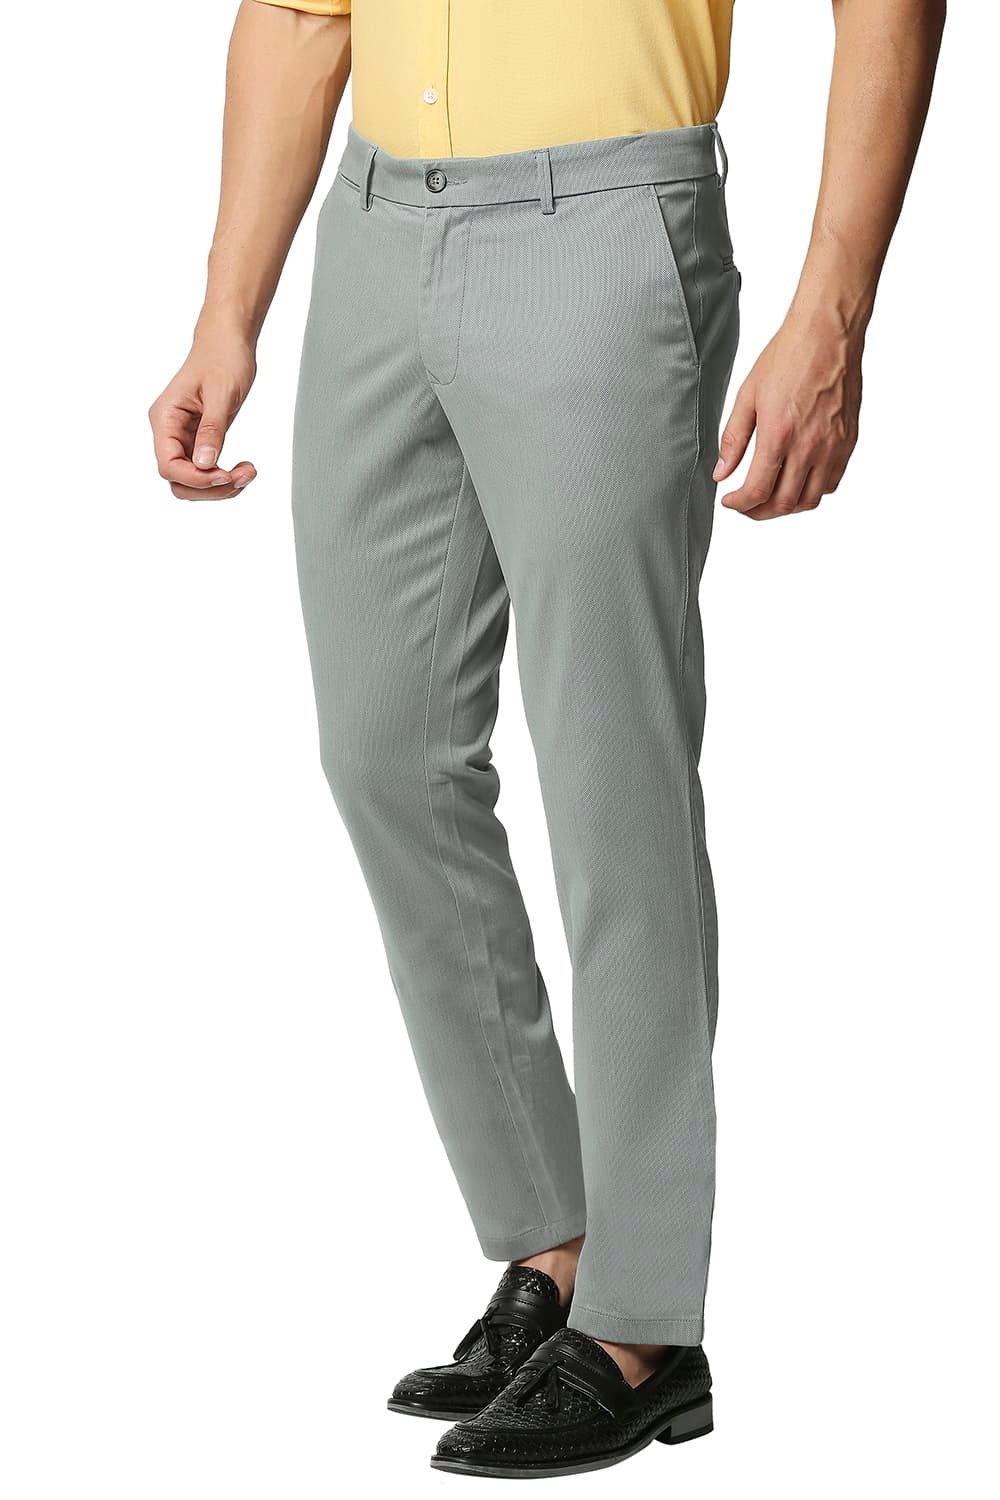 Basics | Men's Mid Grey Cotton Blend Printed Trouser 3